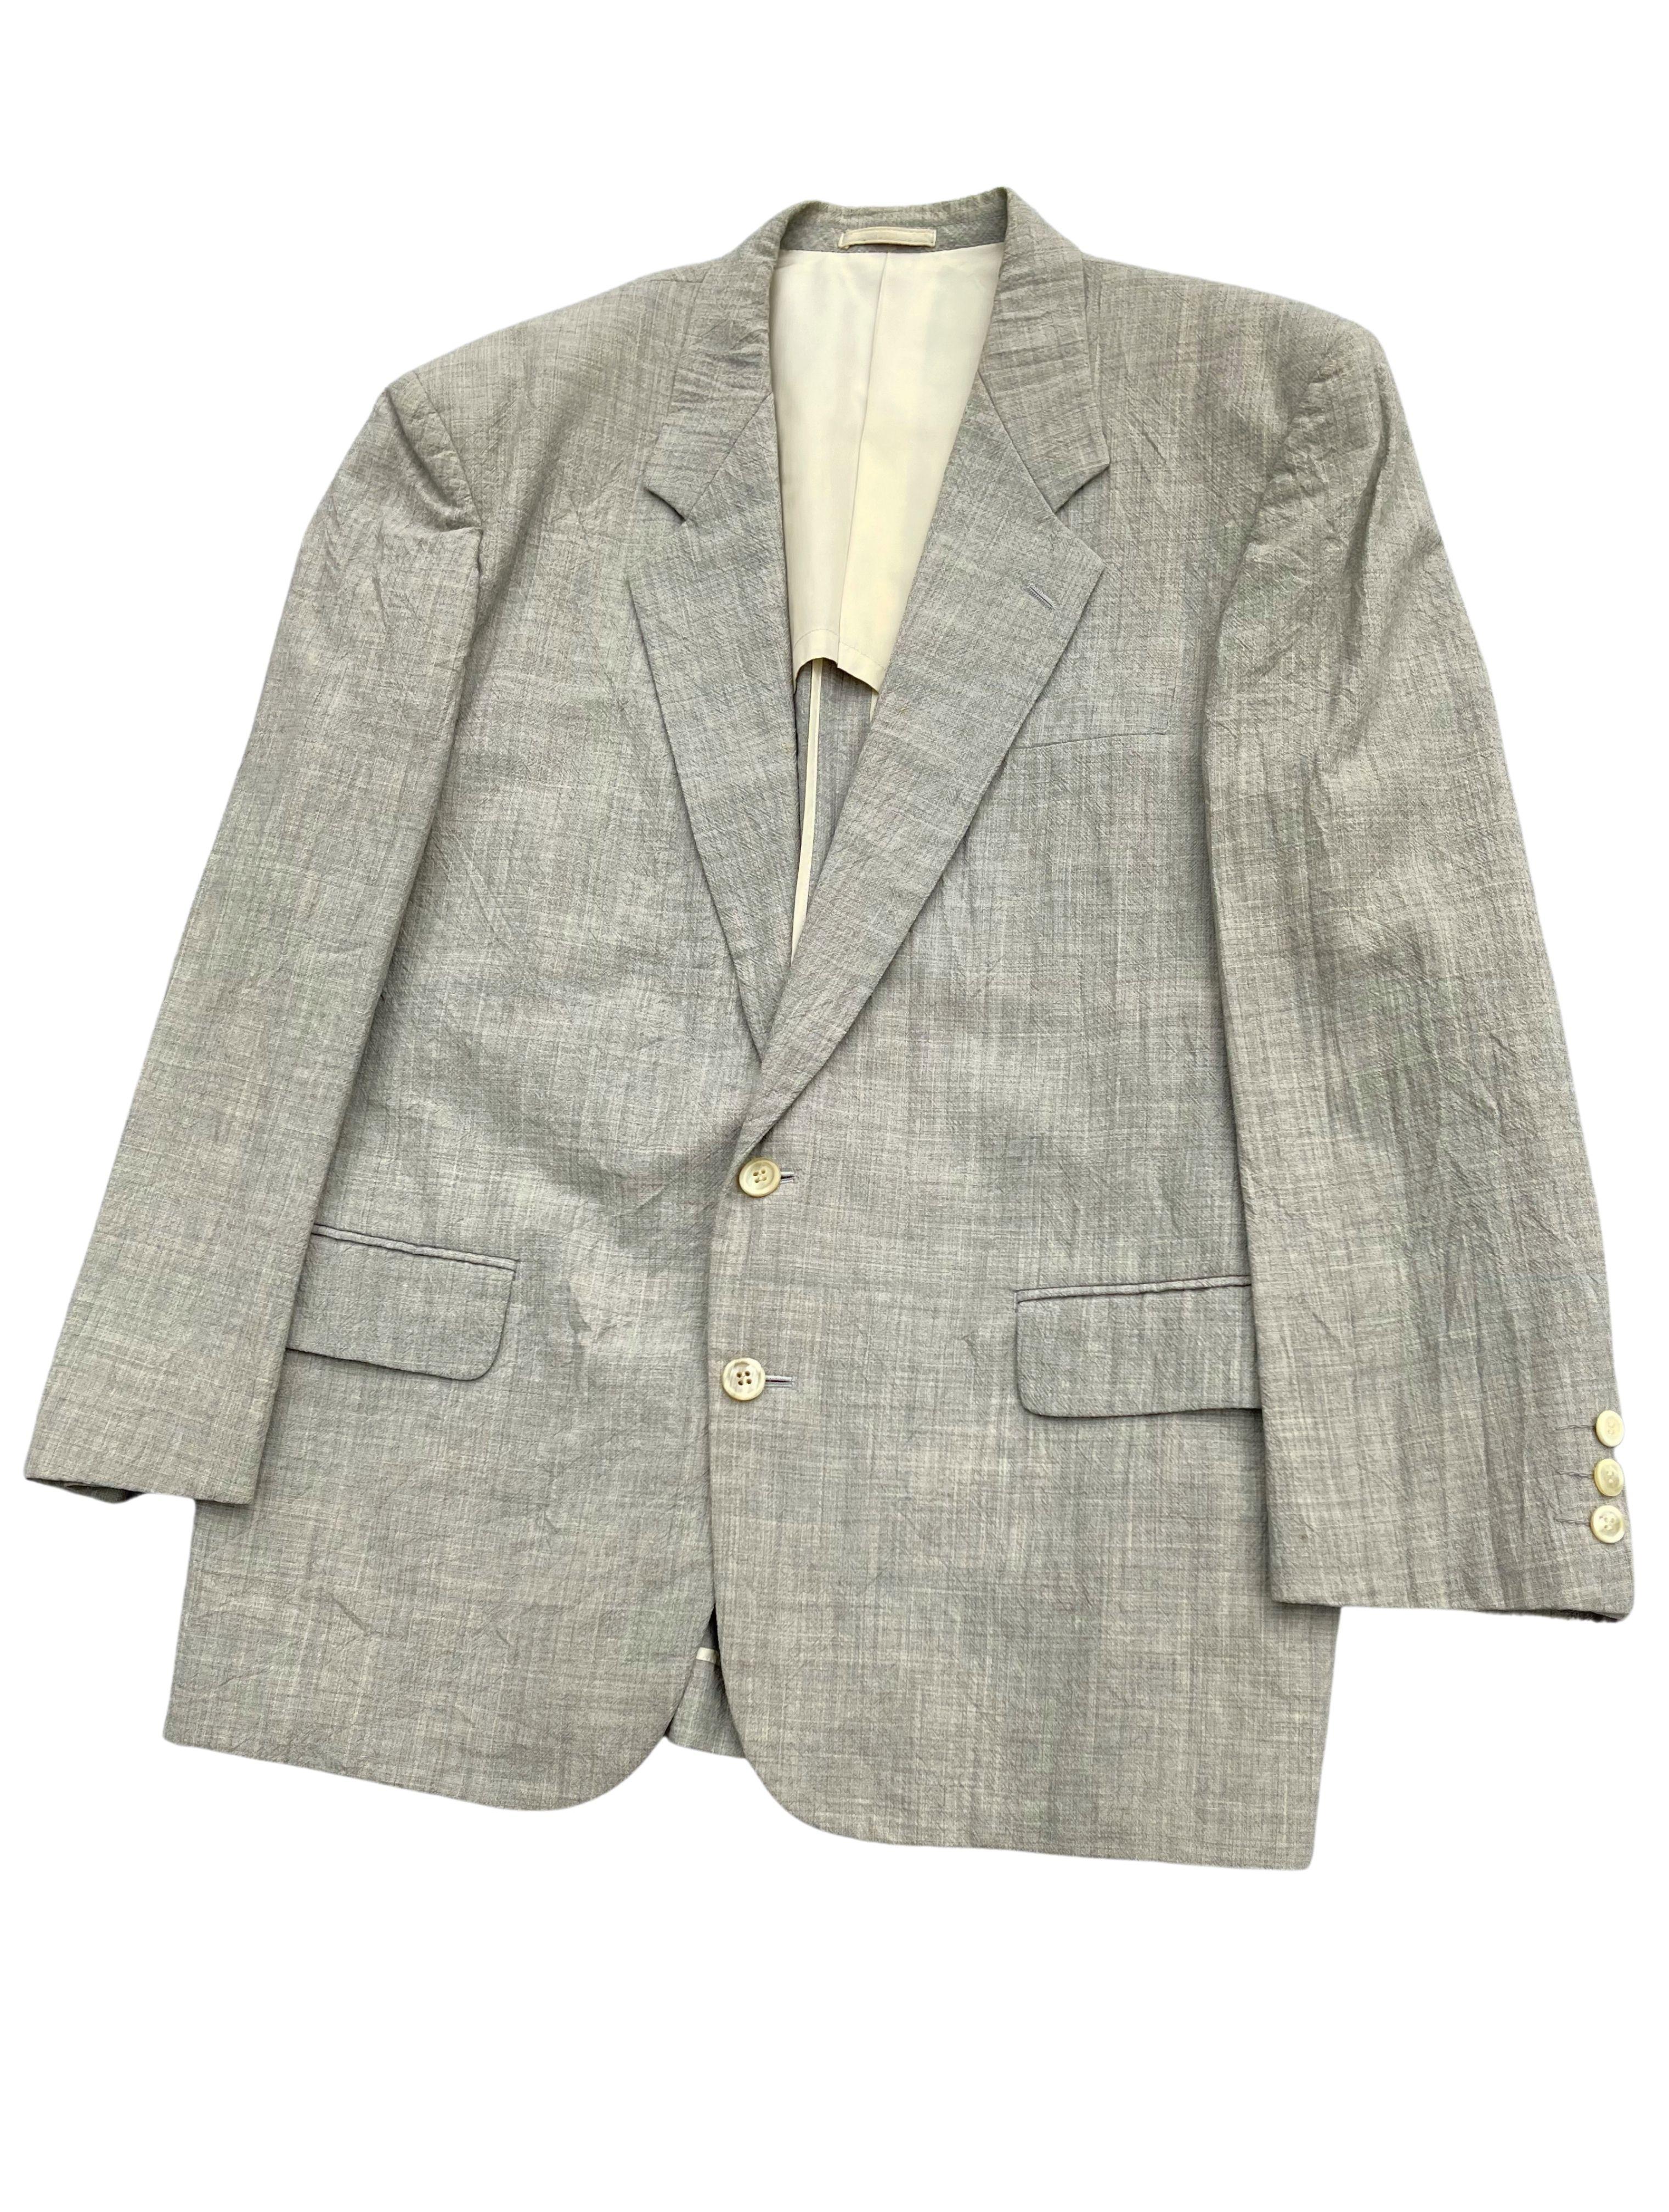 Comme Des Garcons Homme Khaki Gray Suit,  Autumn Winter 1996, size M In Good Condition In Tương Mai Ward, Hoang Mai District